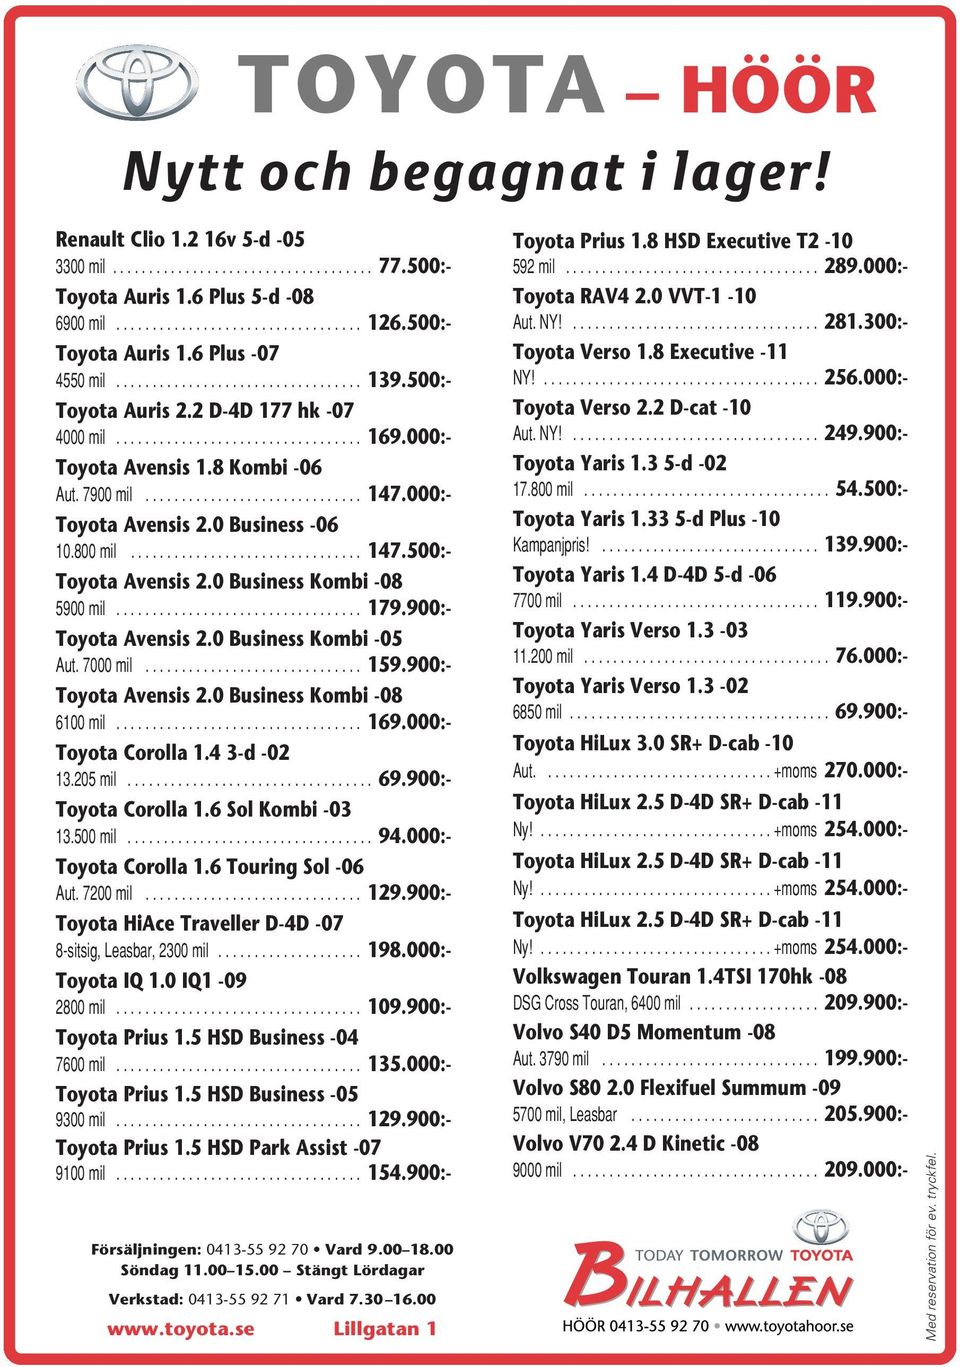 0 Business Kombi -08 5900mil... 179.900:- Toyota Avensis 2.0 Business Kombi -05 Aut.7000mil... 159.900:- Toyota Avensis 2.0 Business Kombi -08 6100mil... 169.000:- Toyota Corolla 1.4 3-d -02 13.